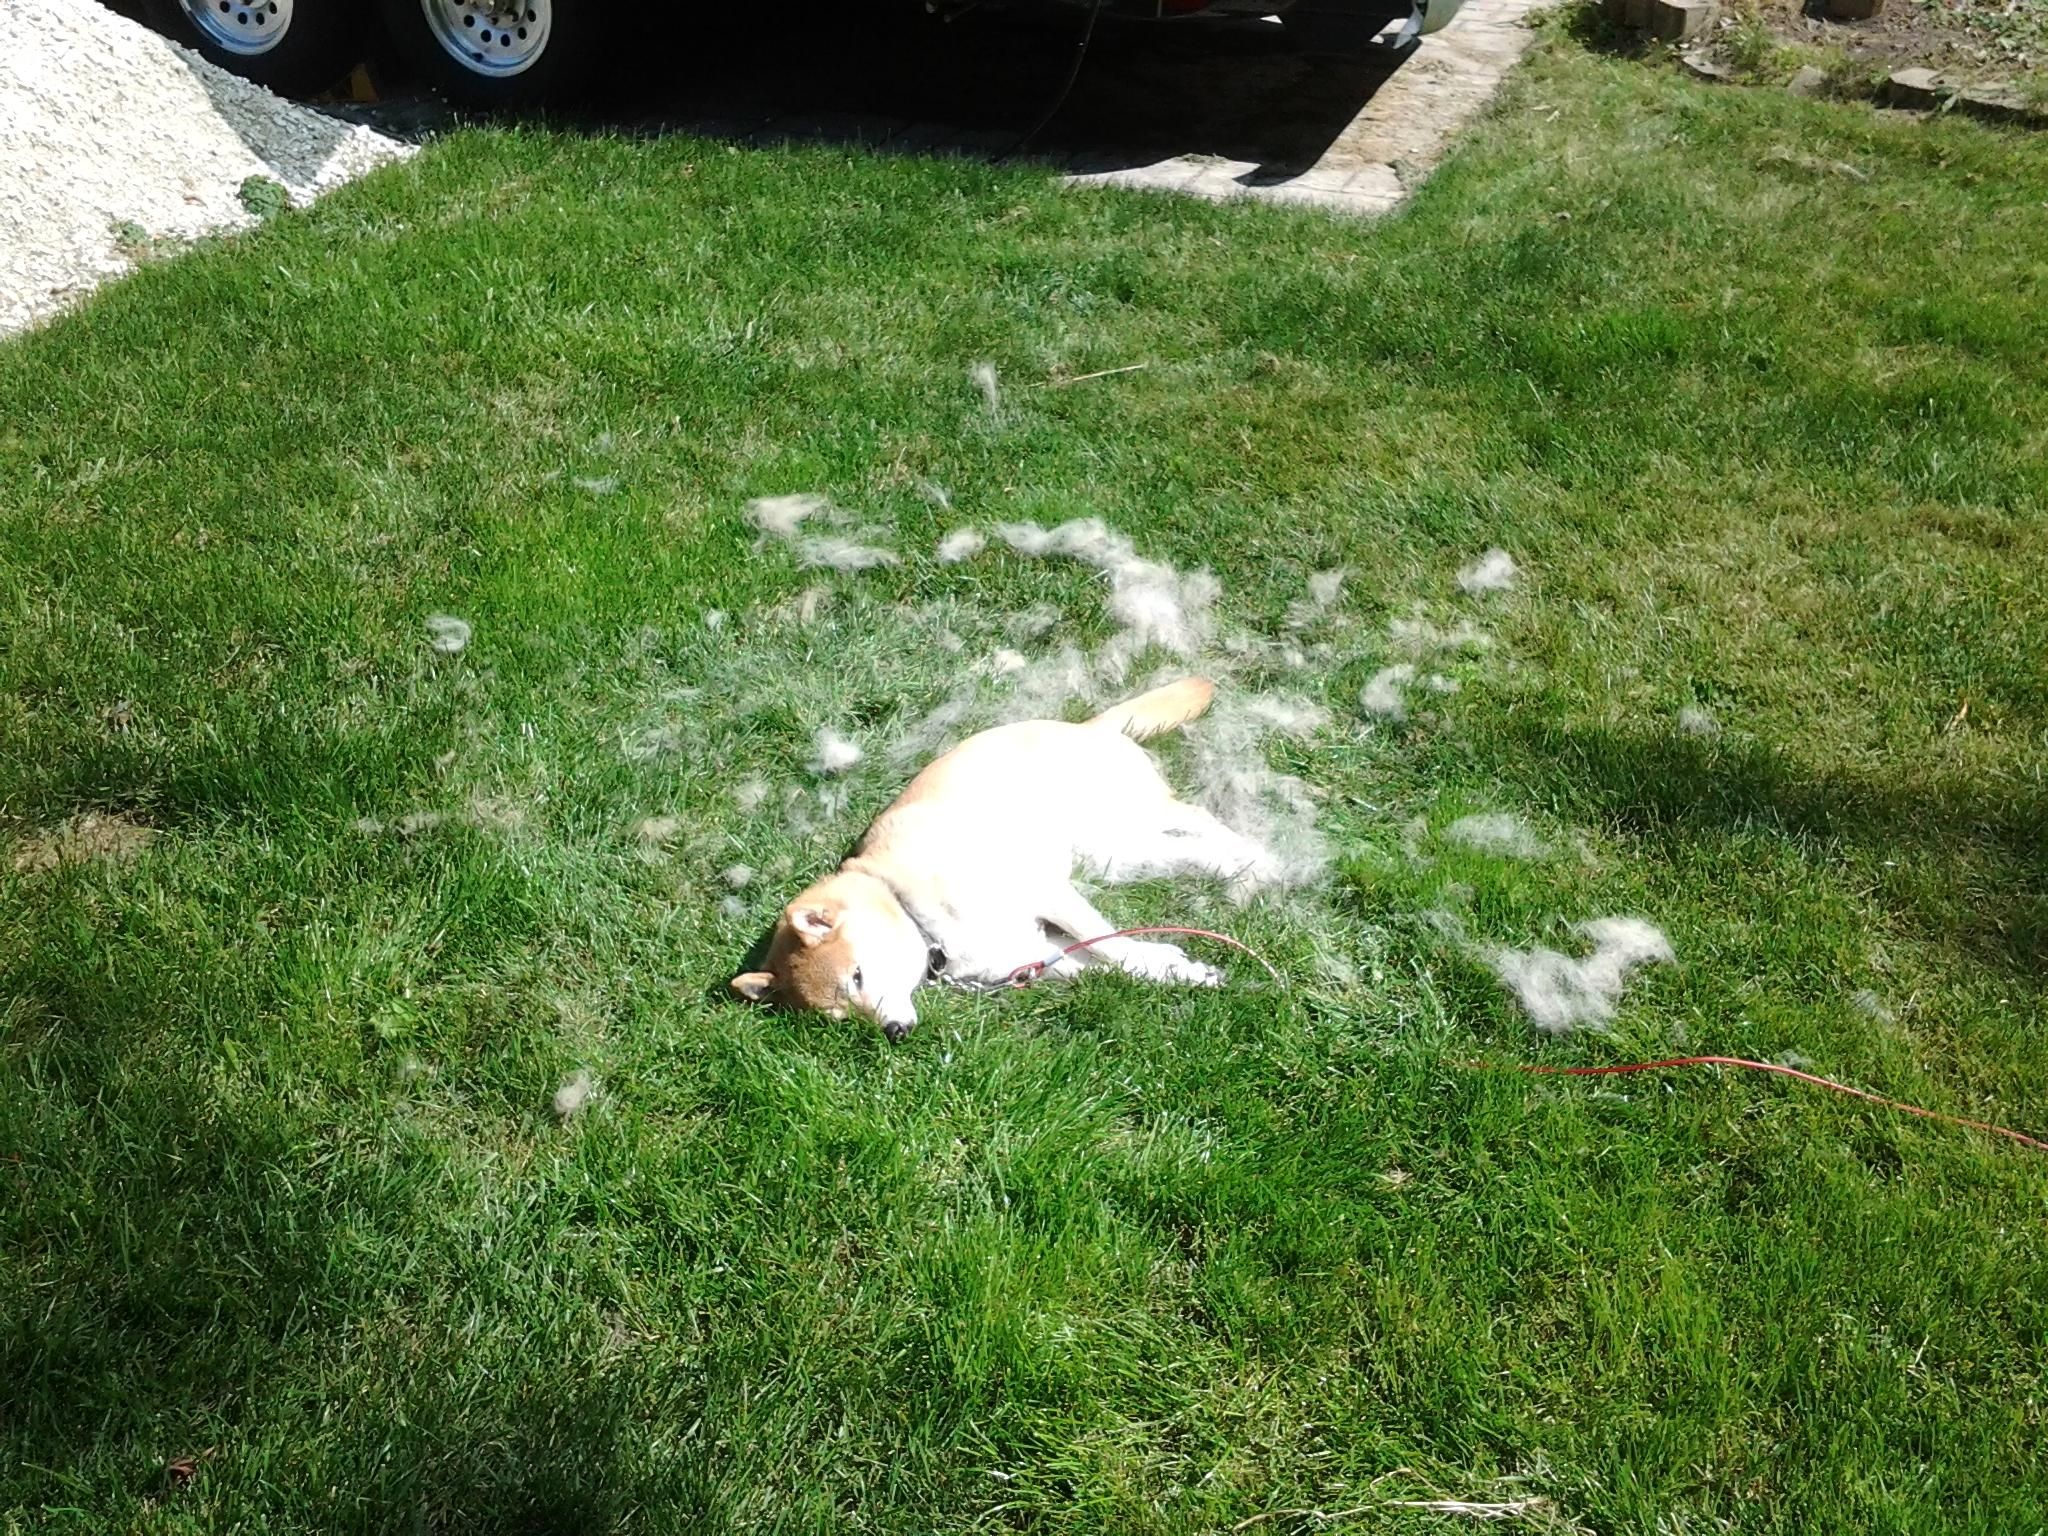 This pic I took of my dog looks like a crime scene photo.